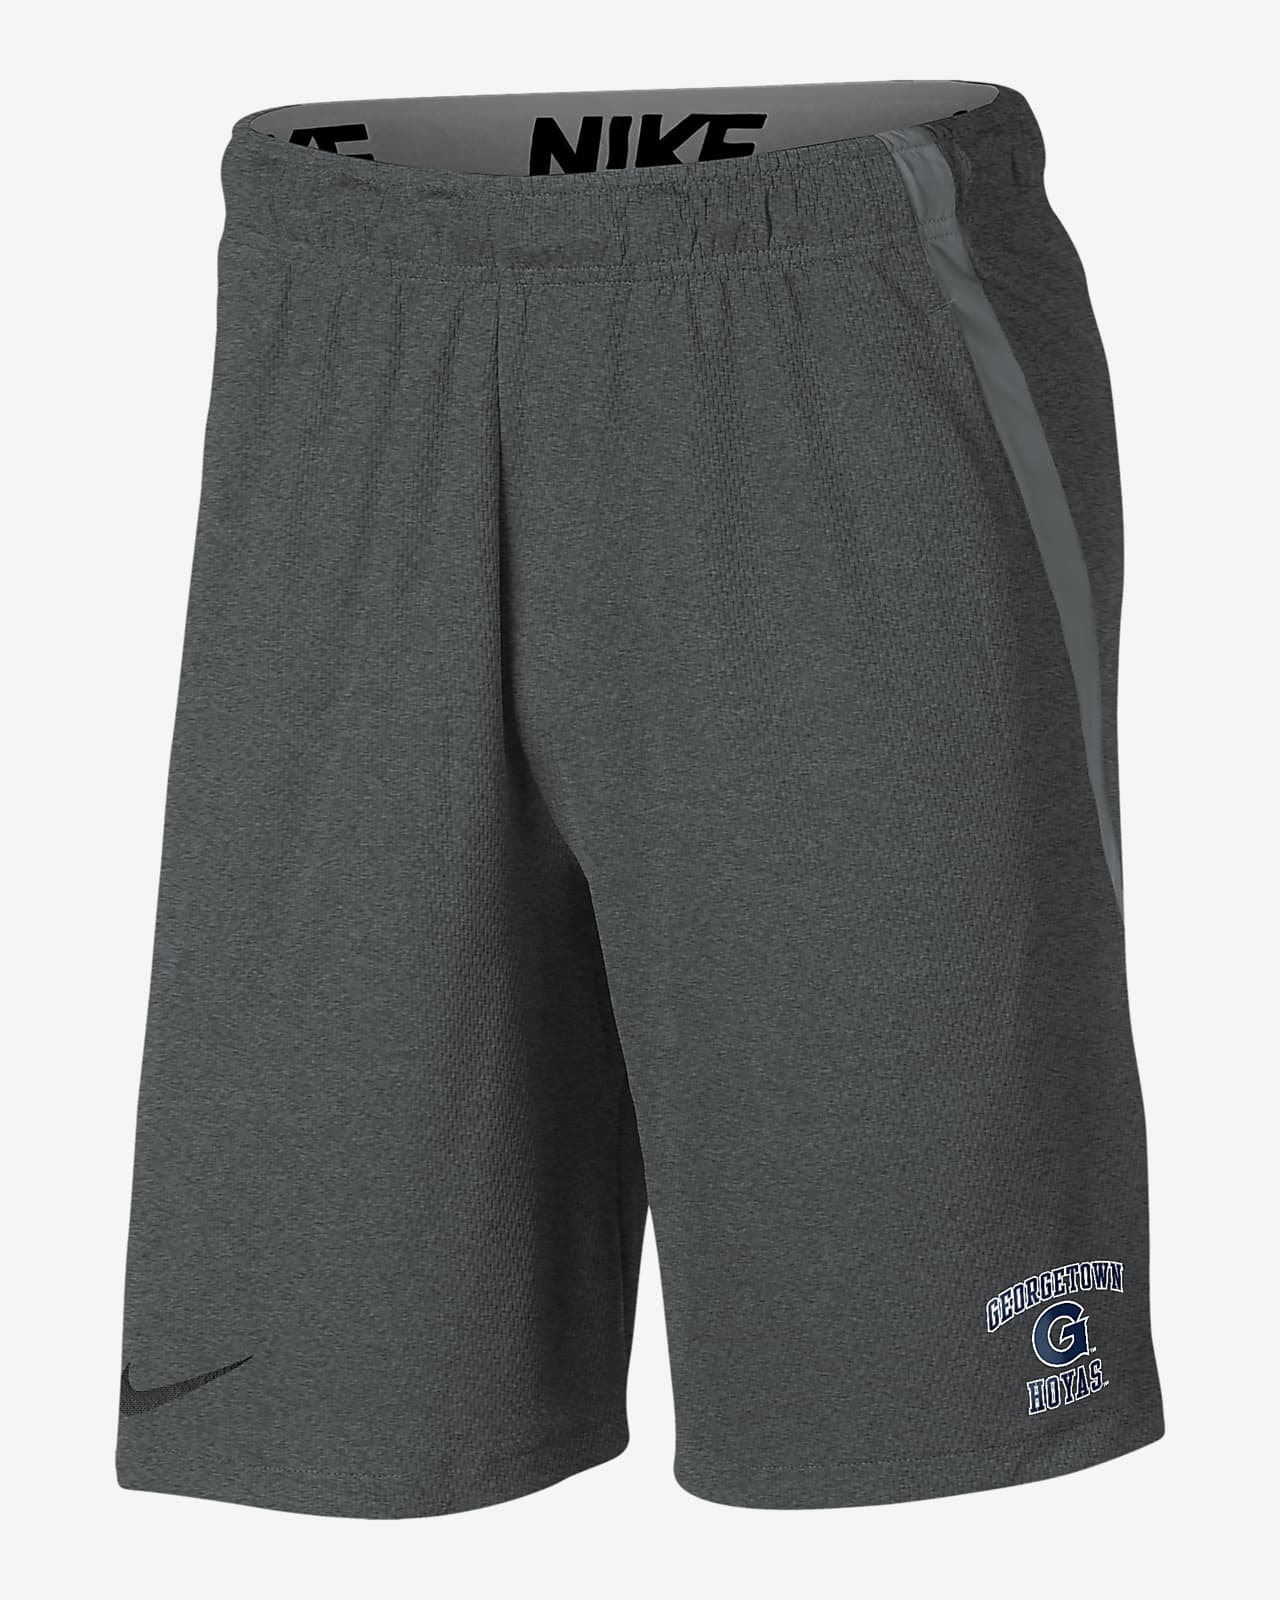 Georgetown Men's Nike College Shorts